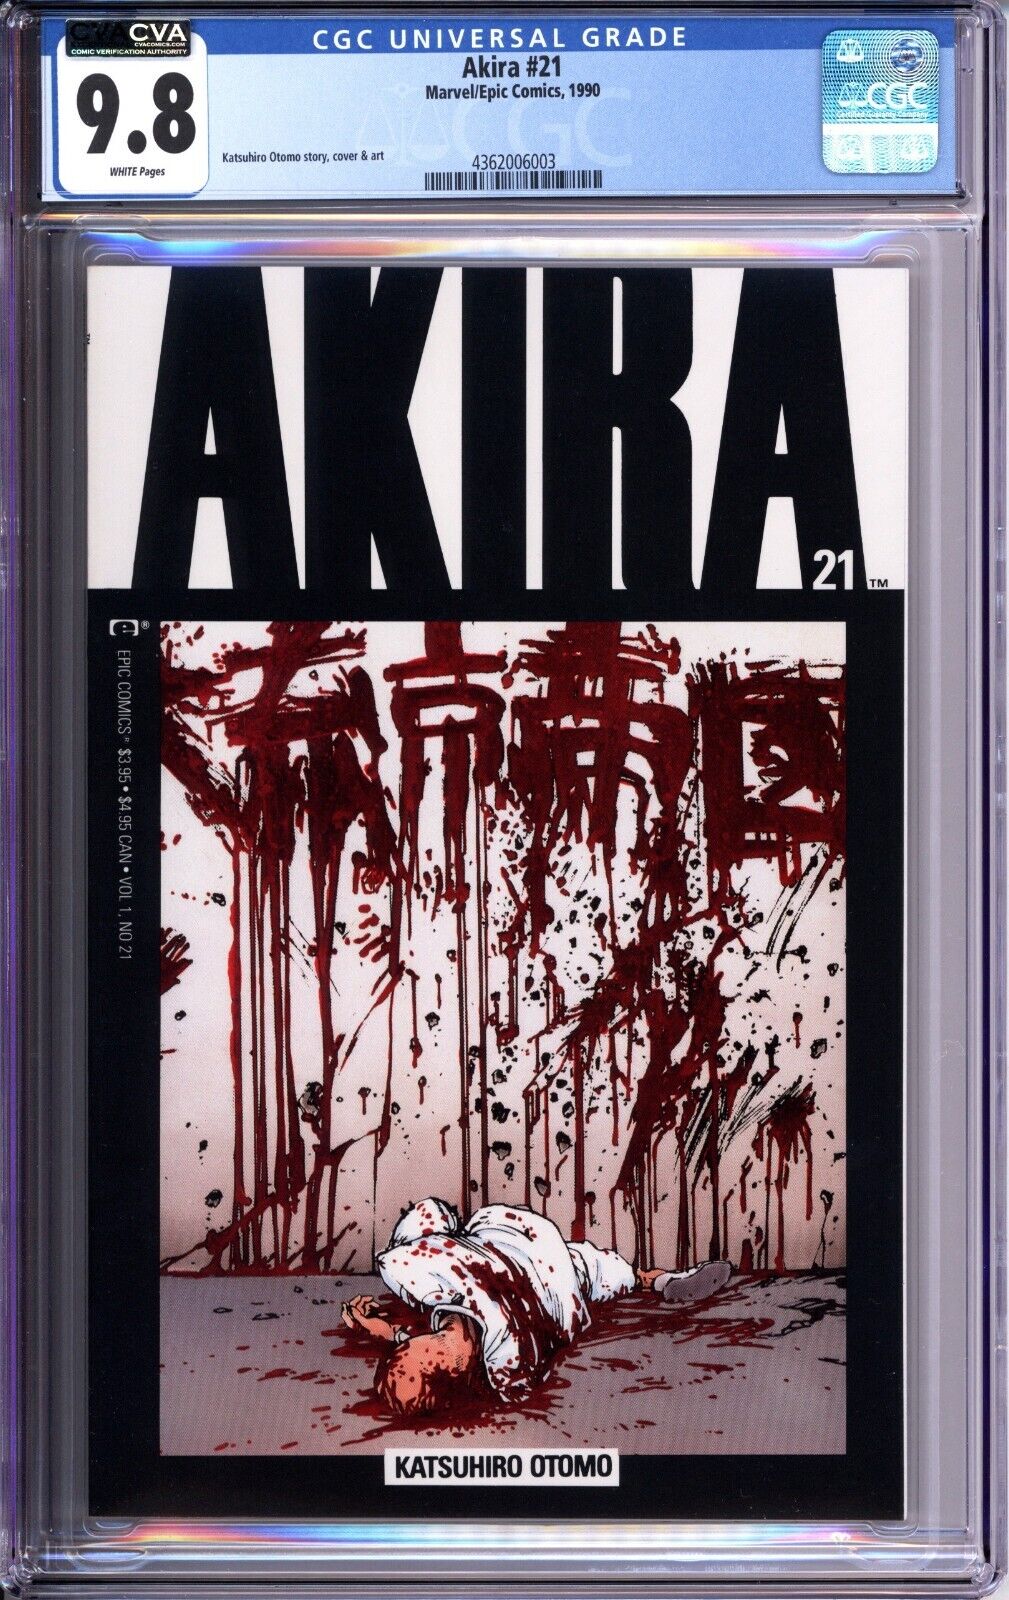 Akira #21 CGC 9.8 white pages Marvel Epic comics CVA exceptional 4362006003